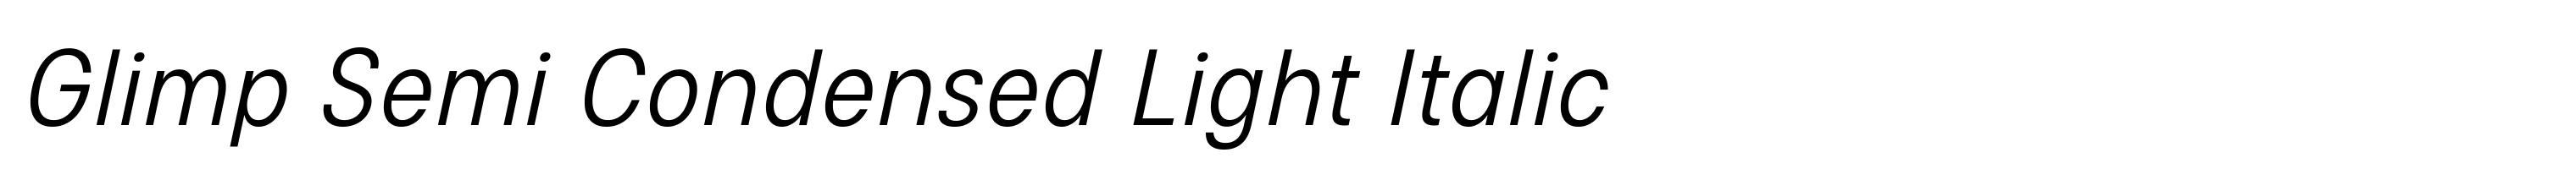 Glimp Semi Condensed Light Italic